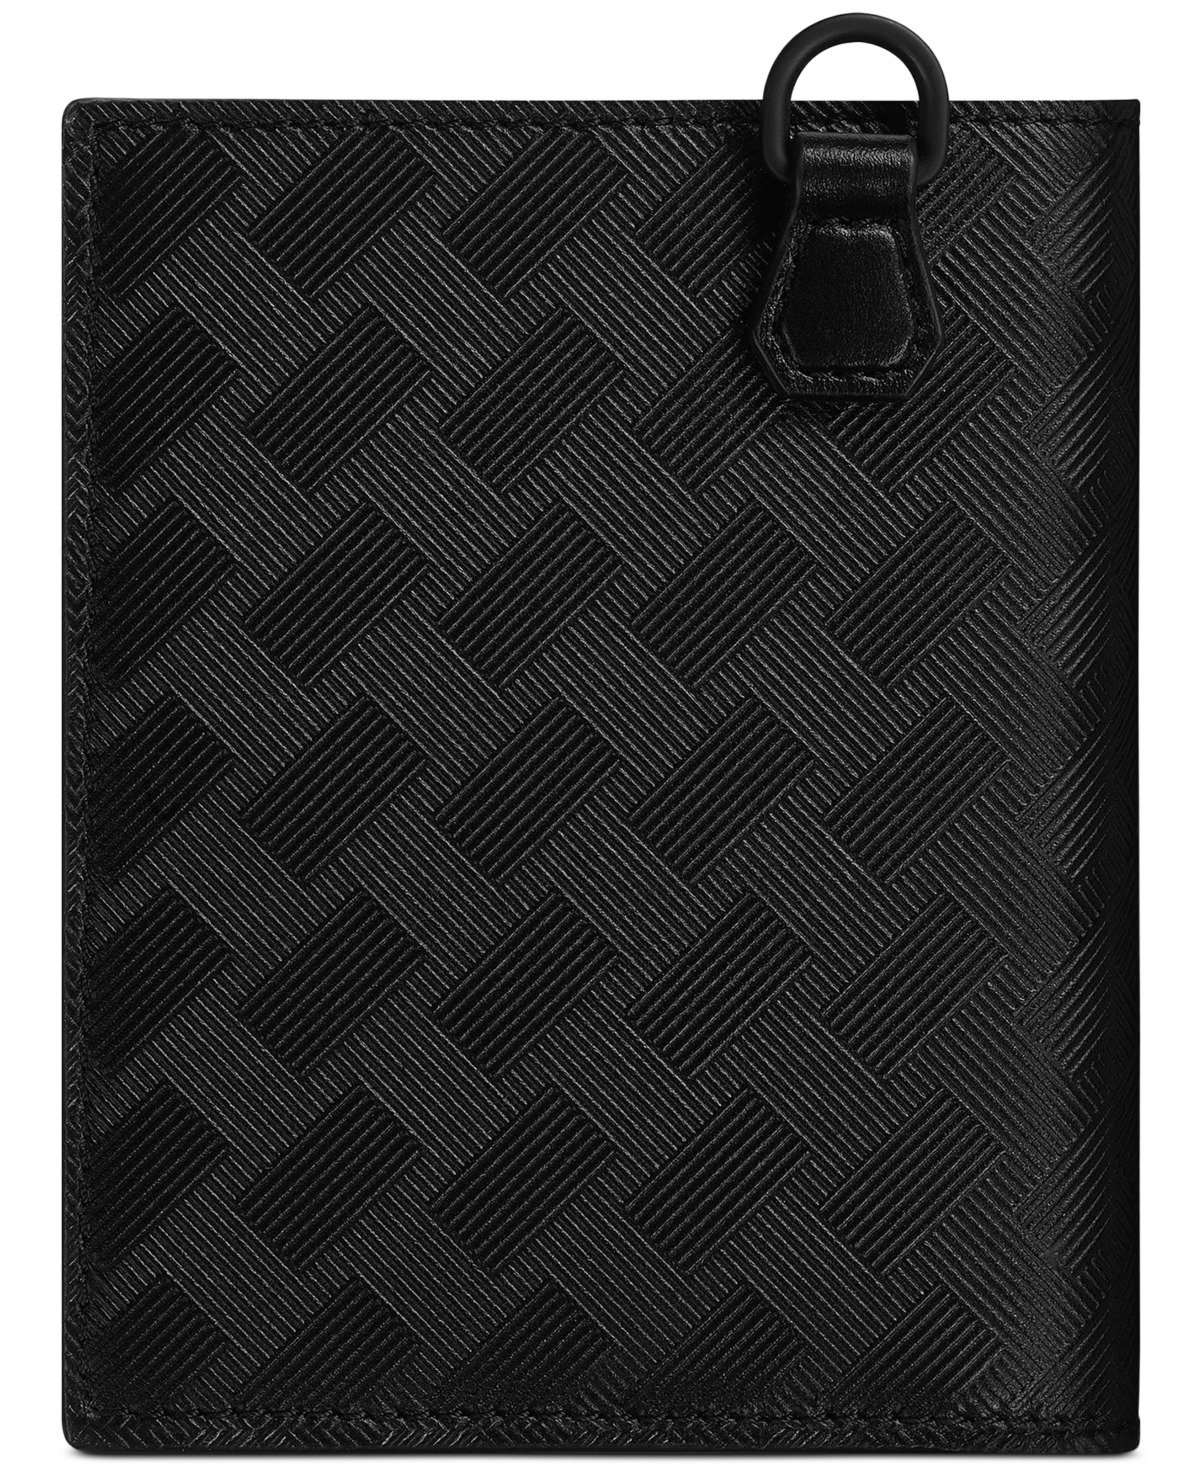 Shop Montblanc Extreme 3.0 Wallet 6cc In Black